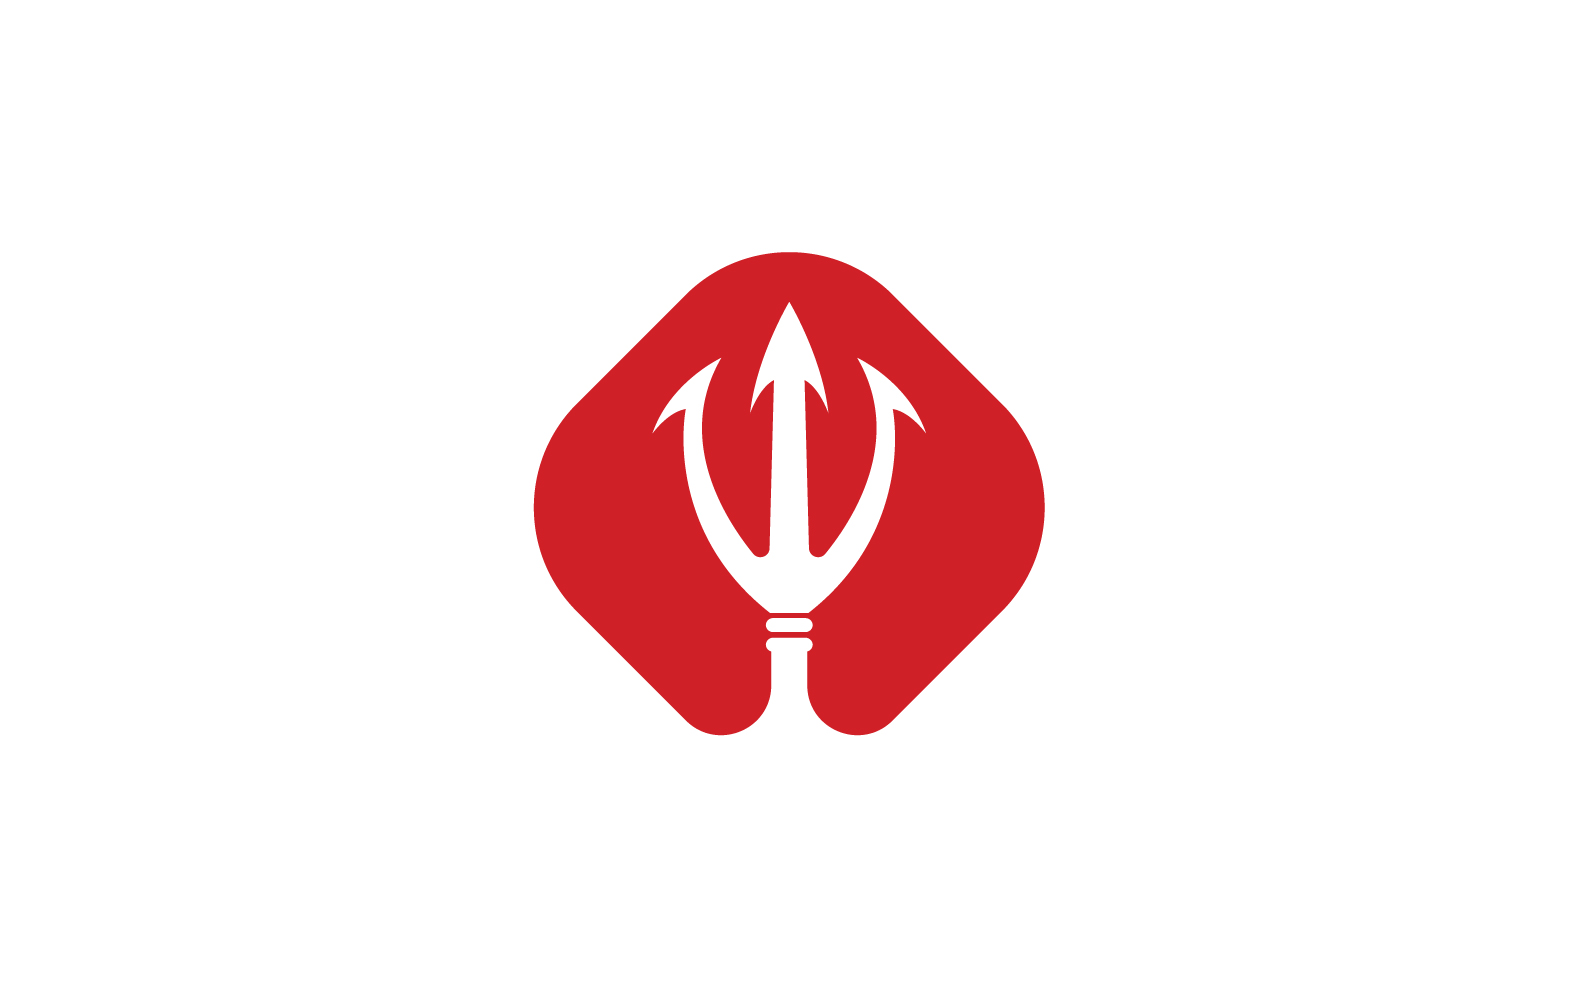 Sword and Magic trident trisula vector logo design element v8